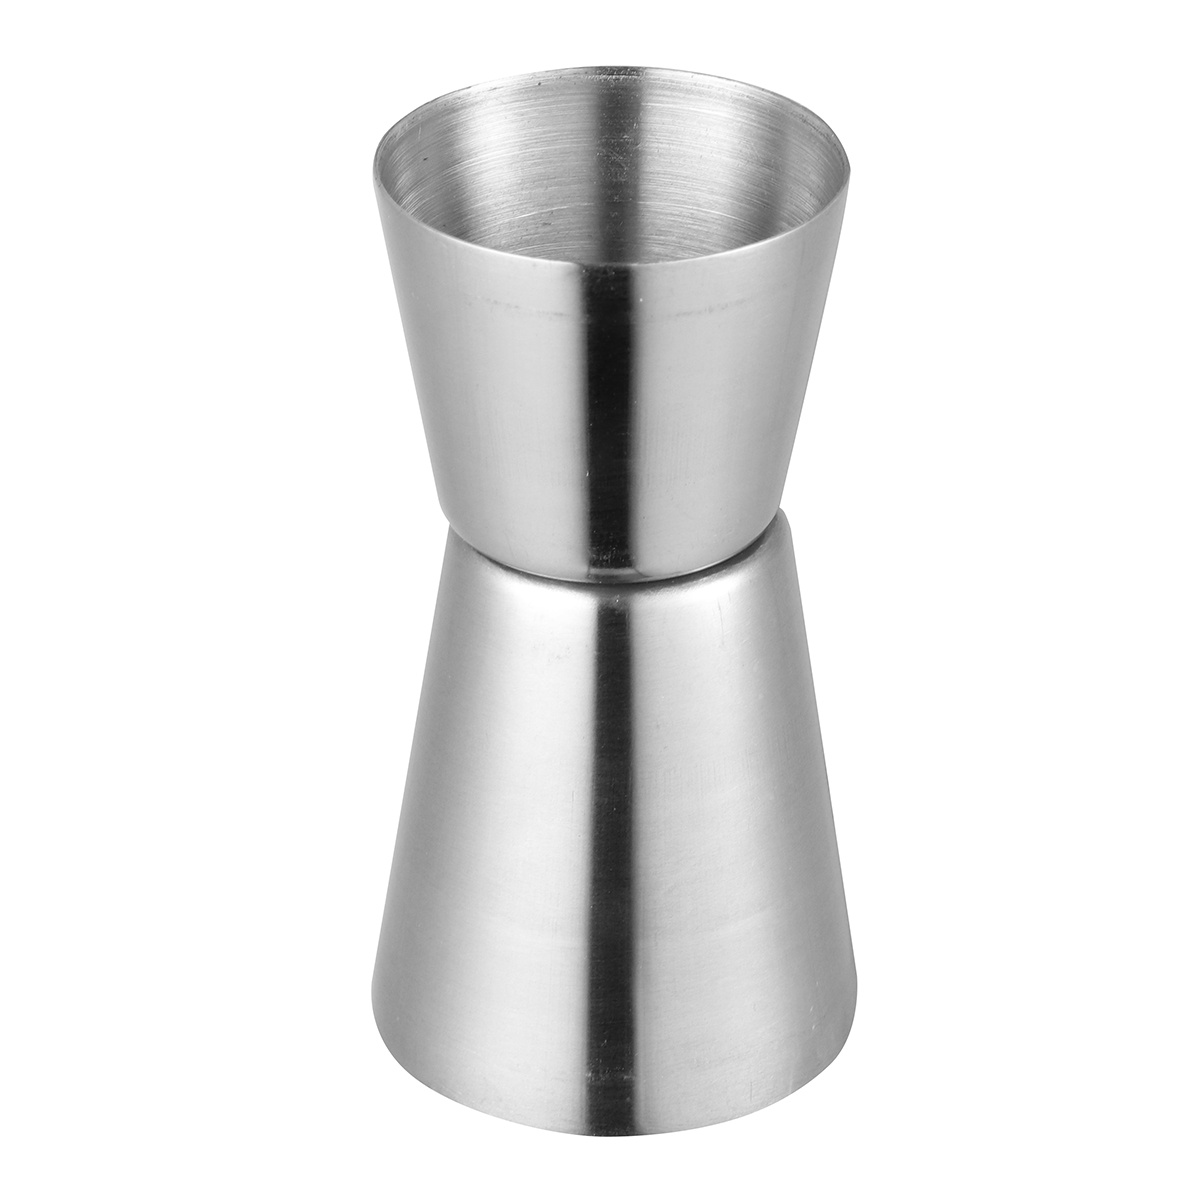 Stainless-Steel-Jigger-Drink-Spirit-Shot-Measure-Measuring-Cup-Cocktail-Wine-Bar-Shaker-15-30ml-1331805